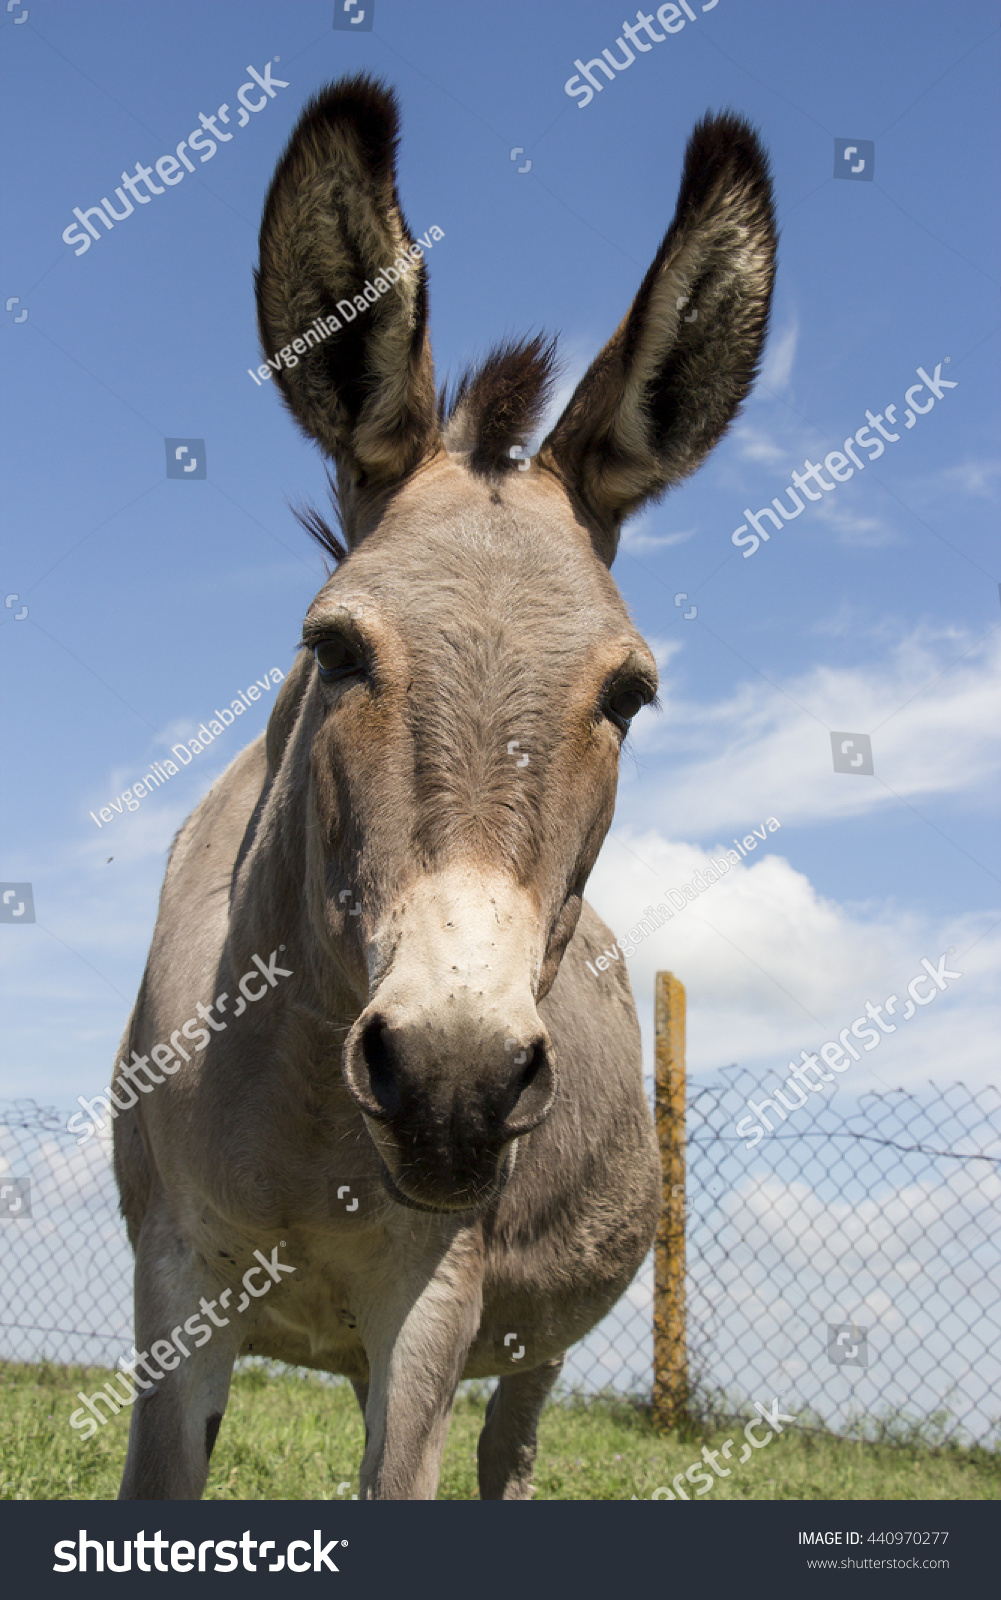 A Donkey Stock Photo 440970277 : Shutterstock